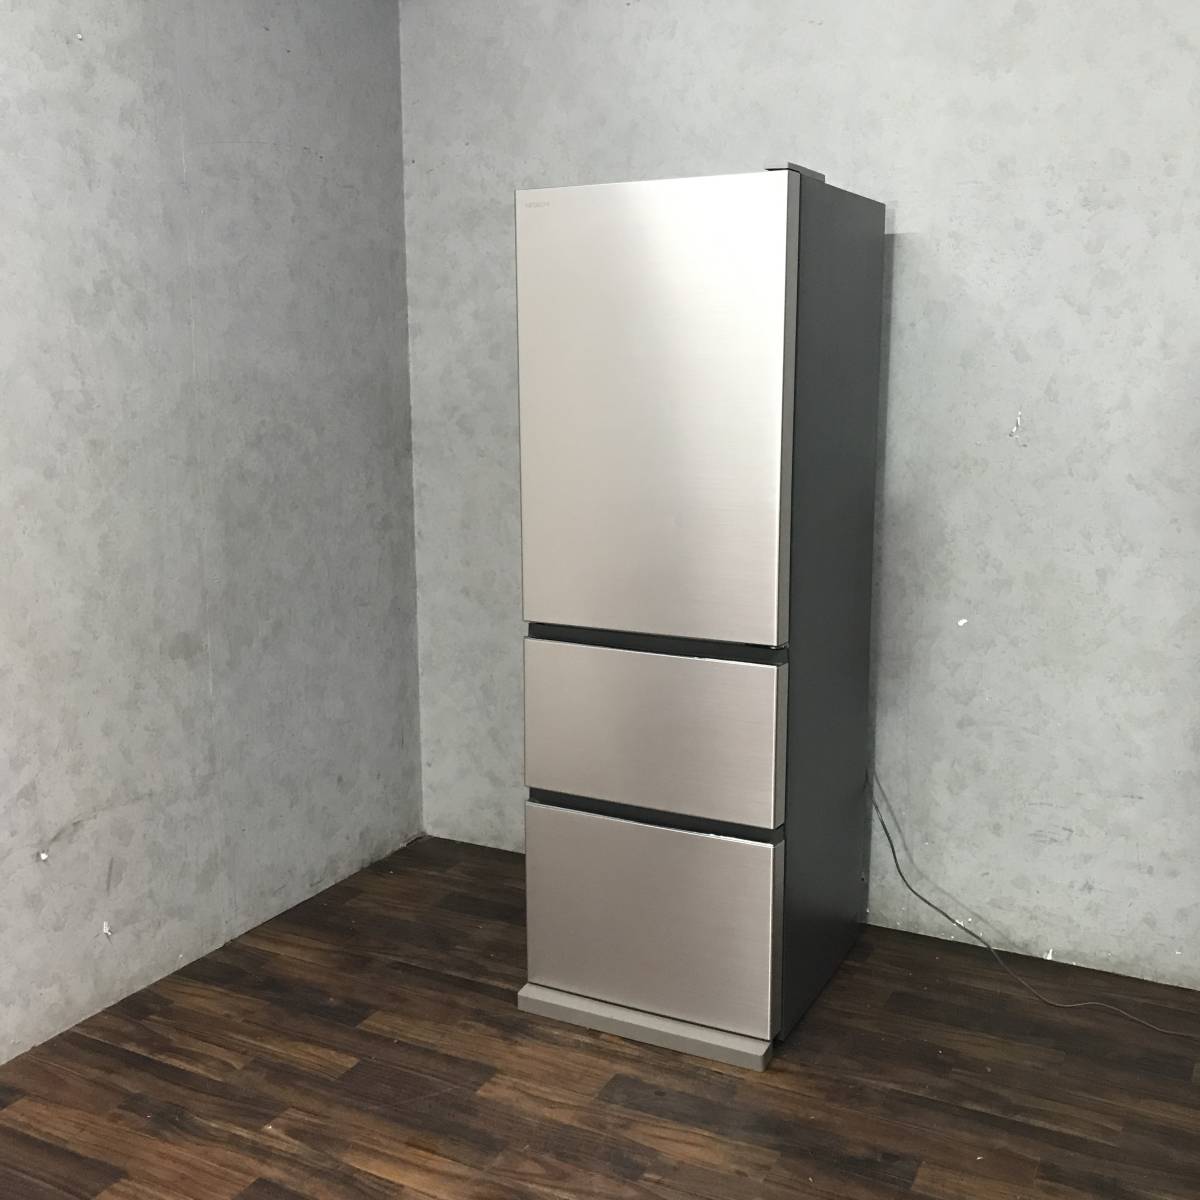 WY8/19 日立 HITACHI ノンフロン冷凍冷蔵庫 R-V38KV(N)型 375L 冷蔵300L冷凍75L 右開き 3ドア 2019年製 ※動作確認済み_画像1